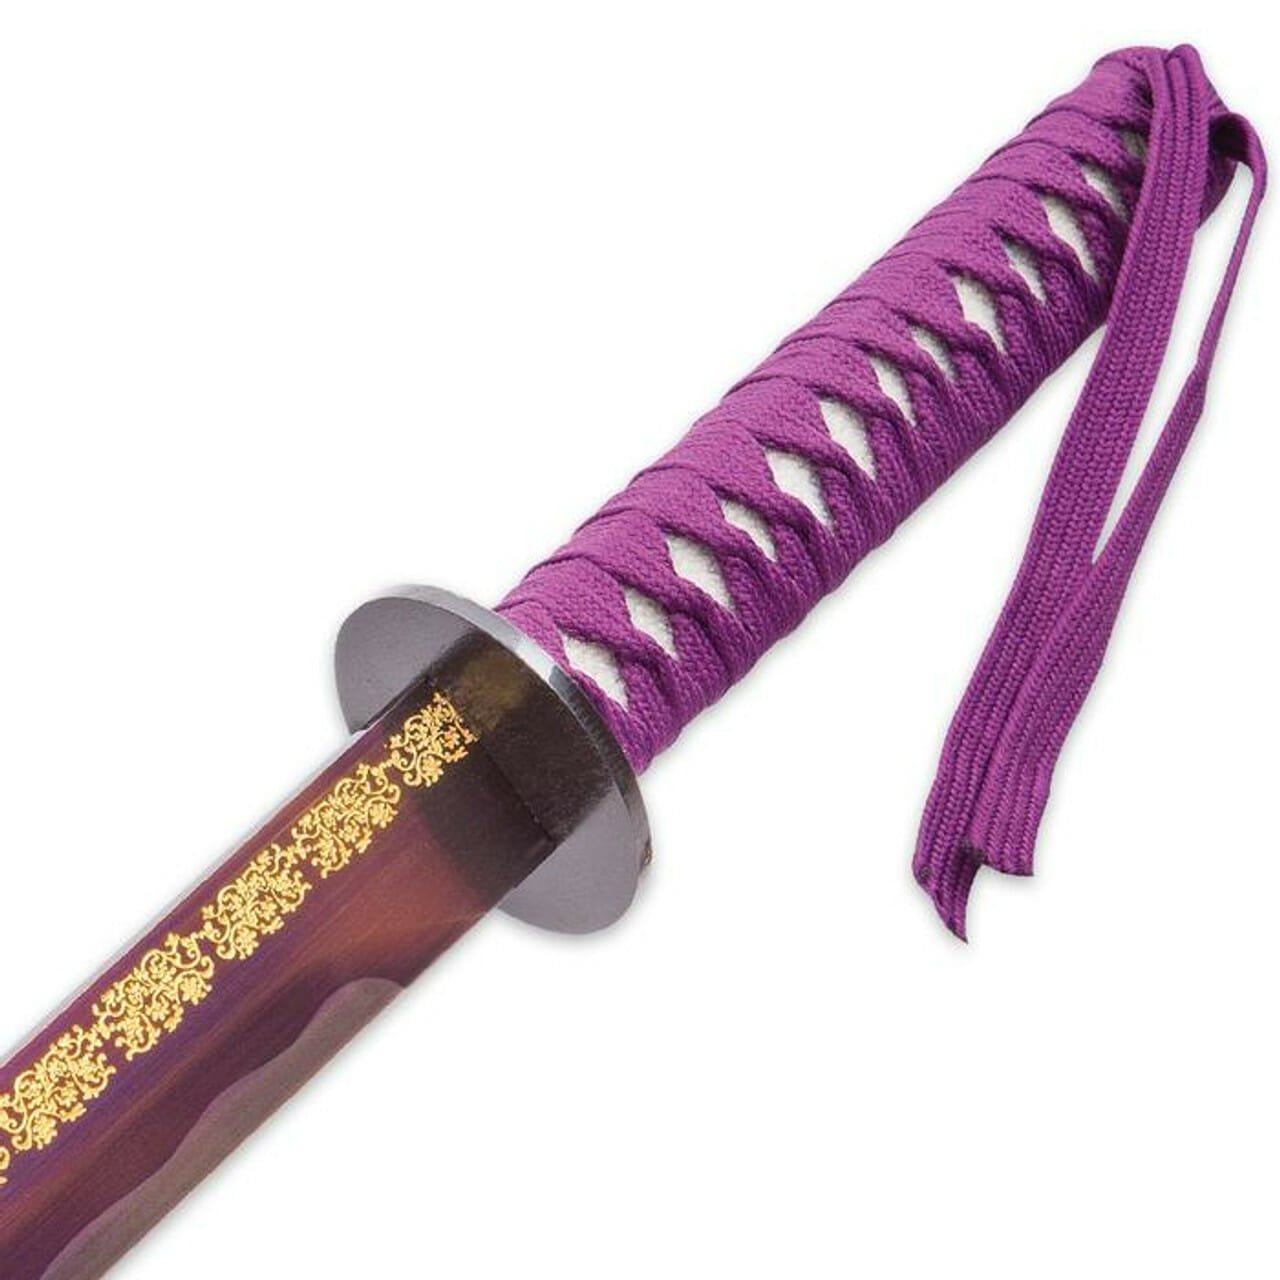 2. Purple Nichirin Sword